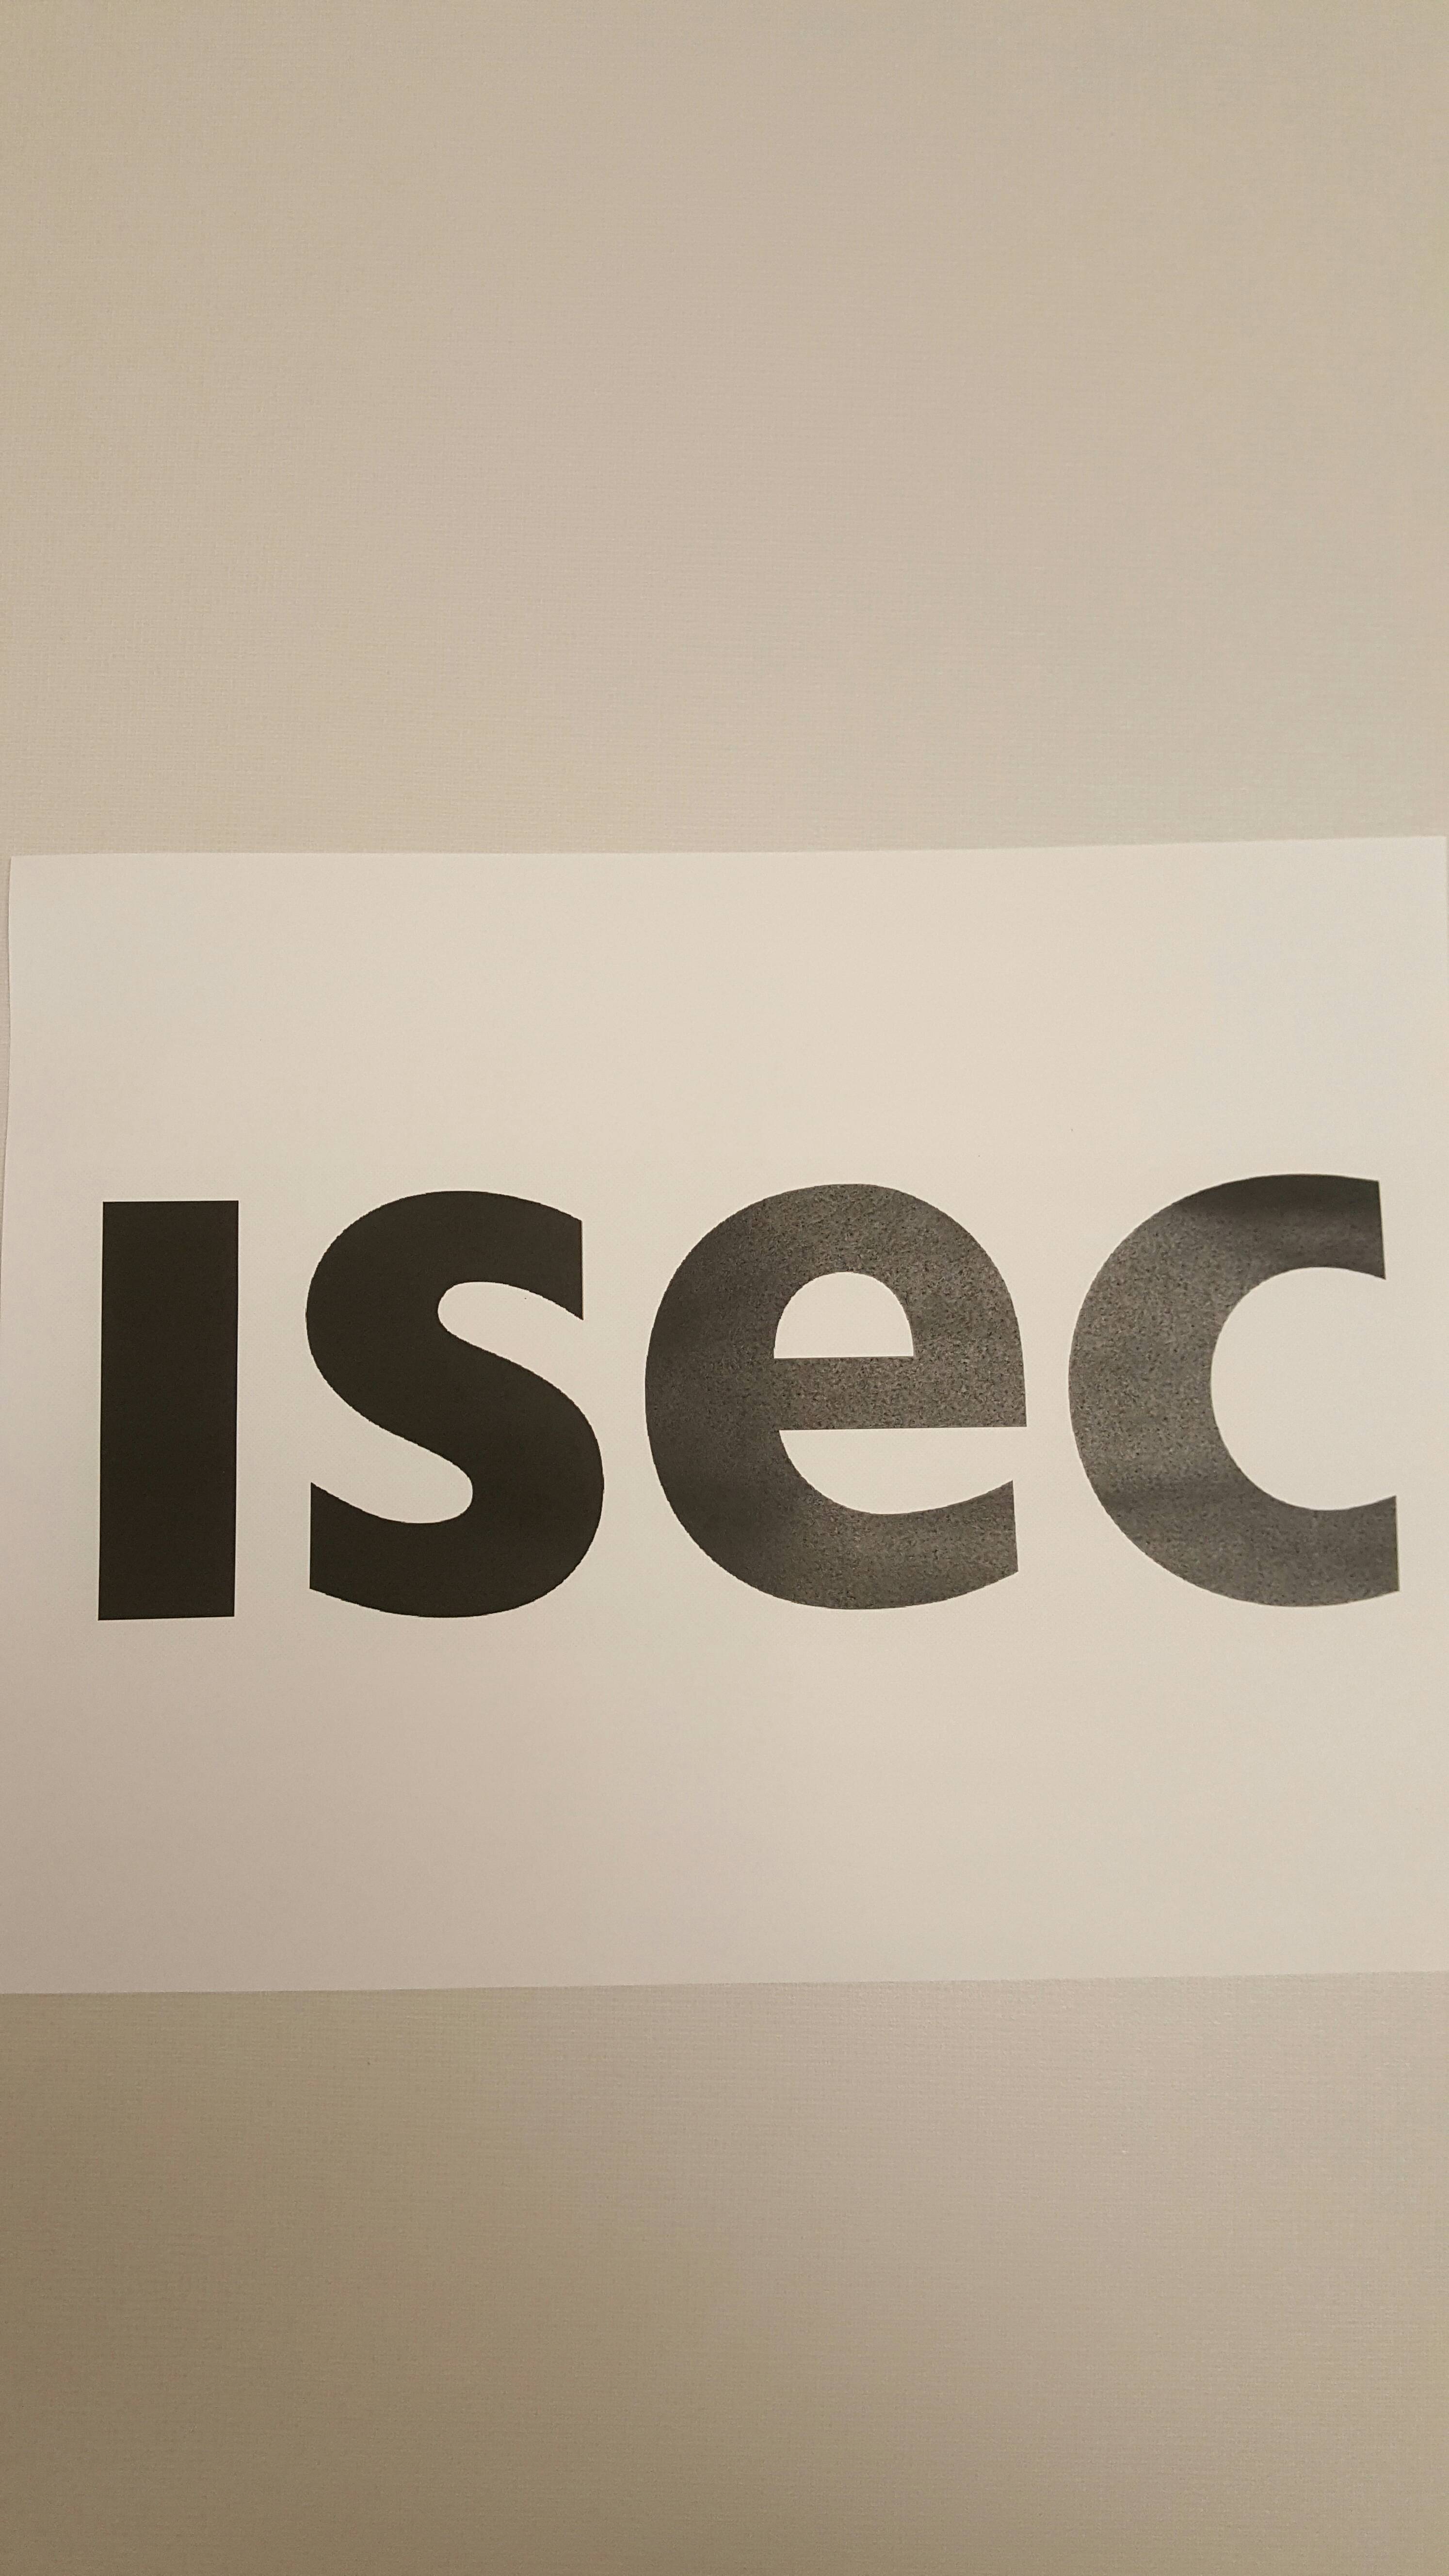 ISEC Jobsite Safety Inspection 